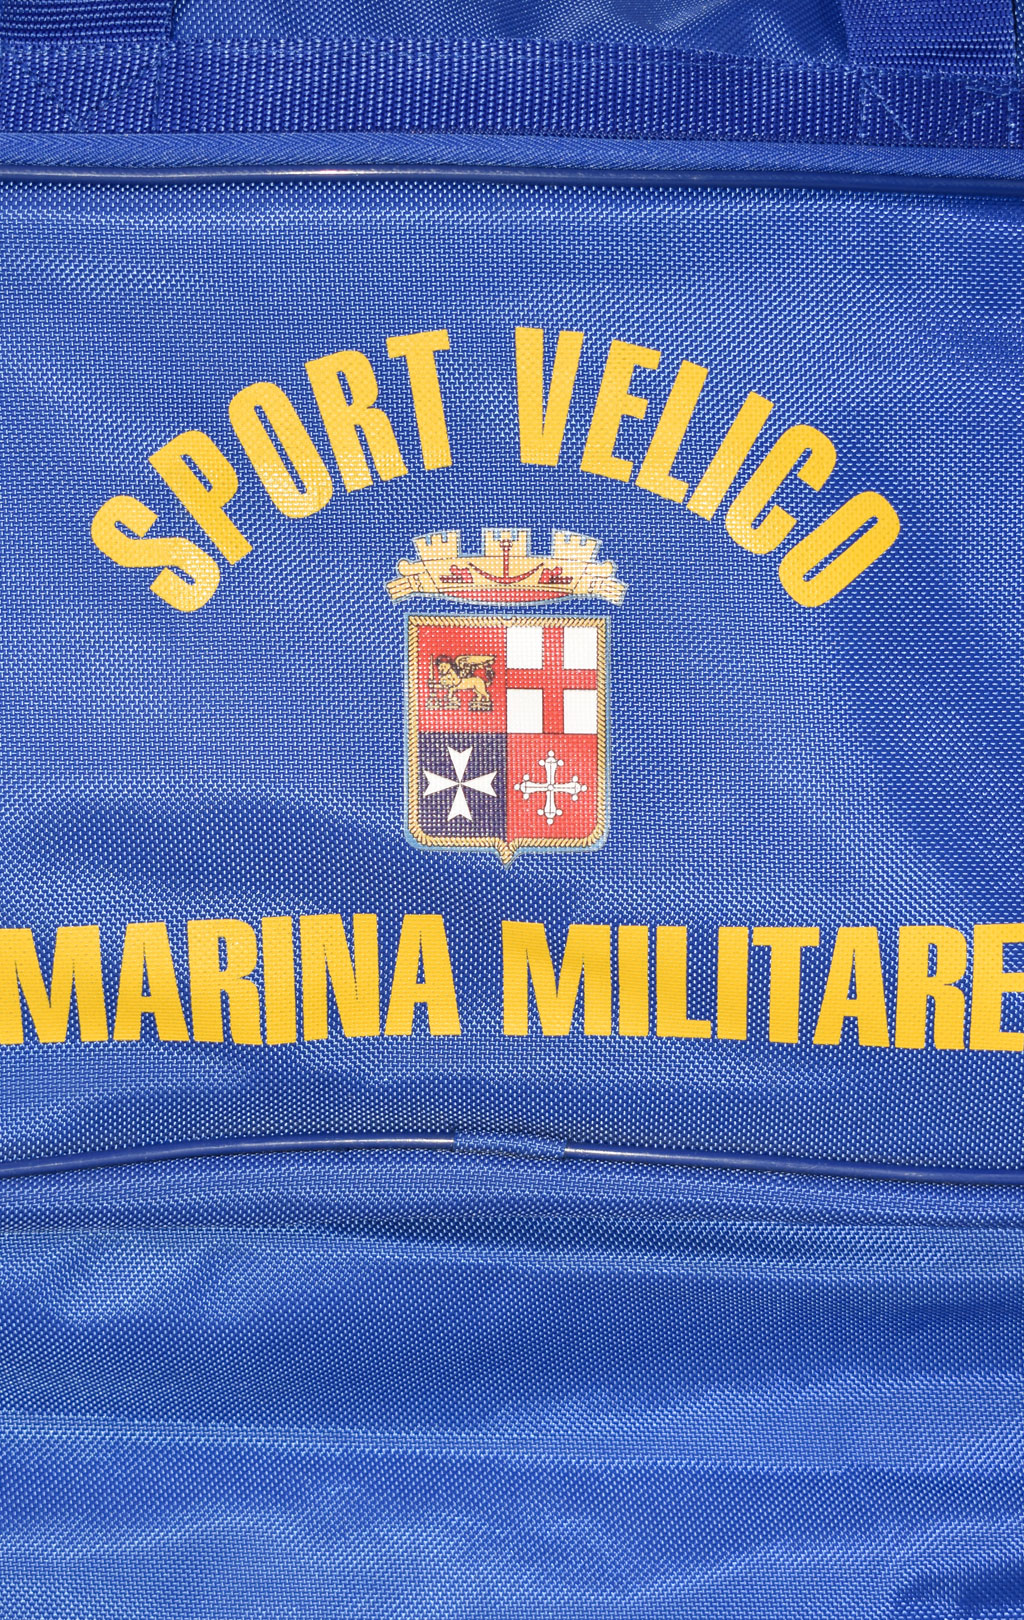 Сумка вещевая армейская SPORT VELICO MARINA MILITARE 52x30x45 light blue Италия